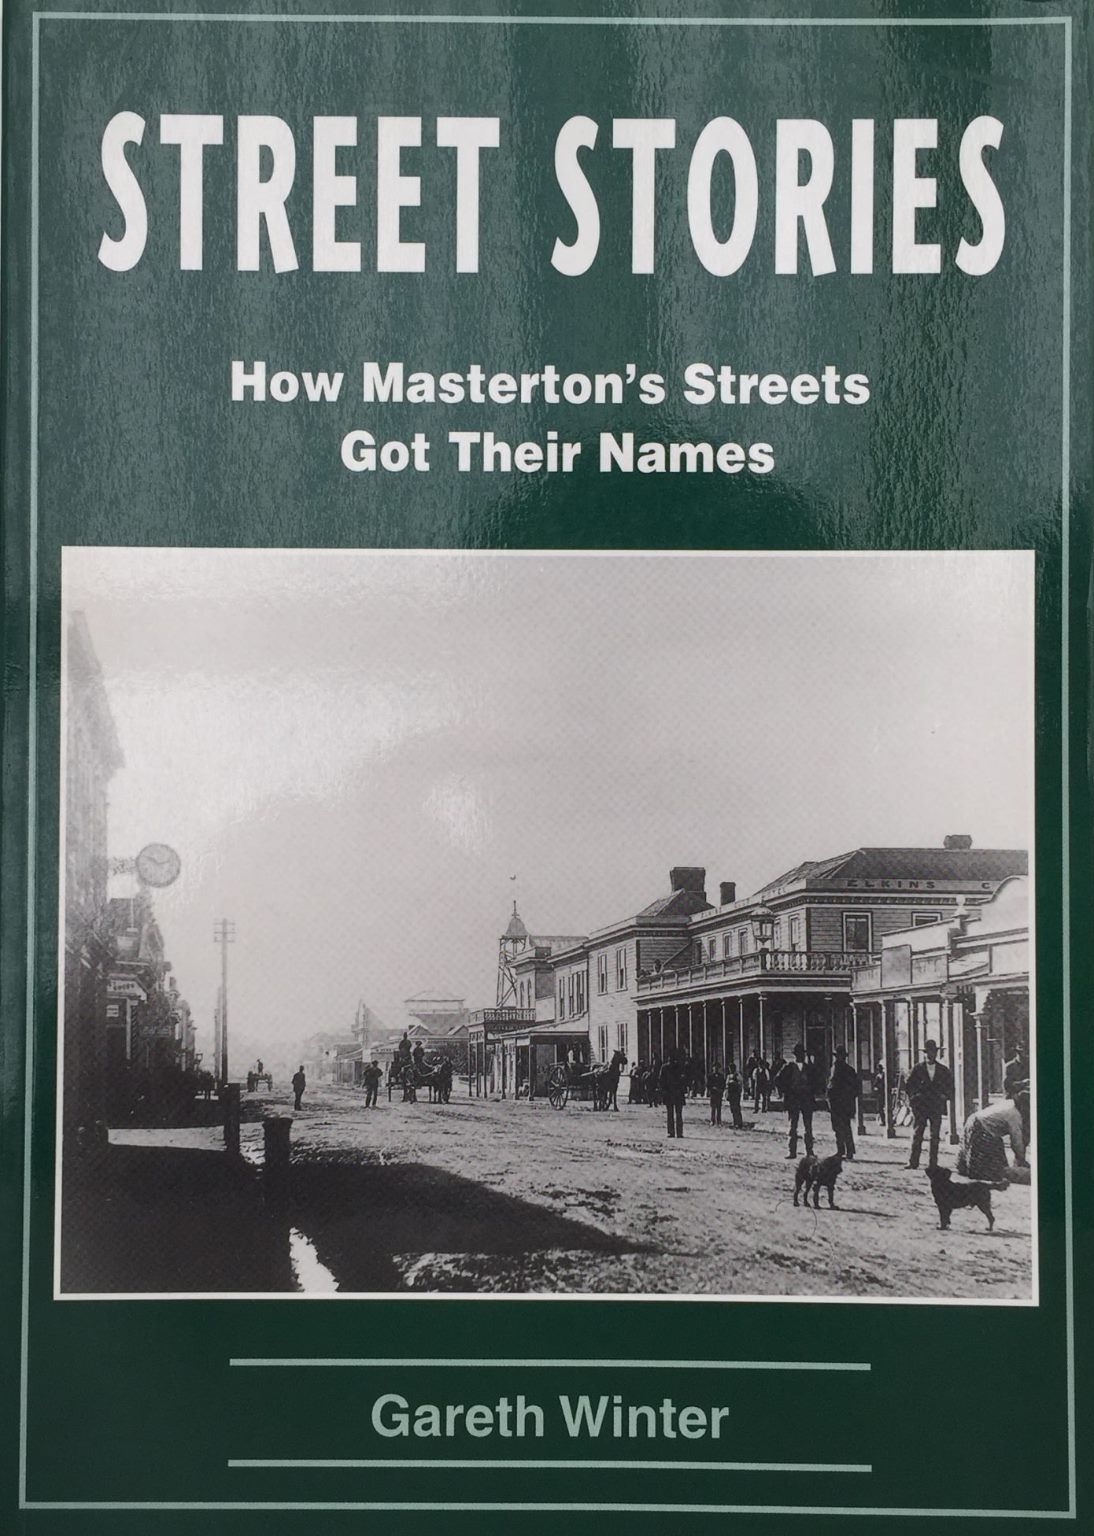 STREET STORIES: How Masterton's Streets Got Their Names